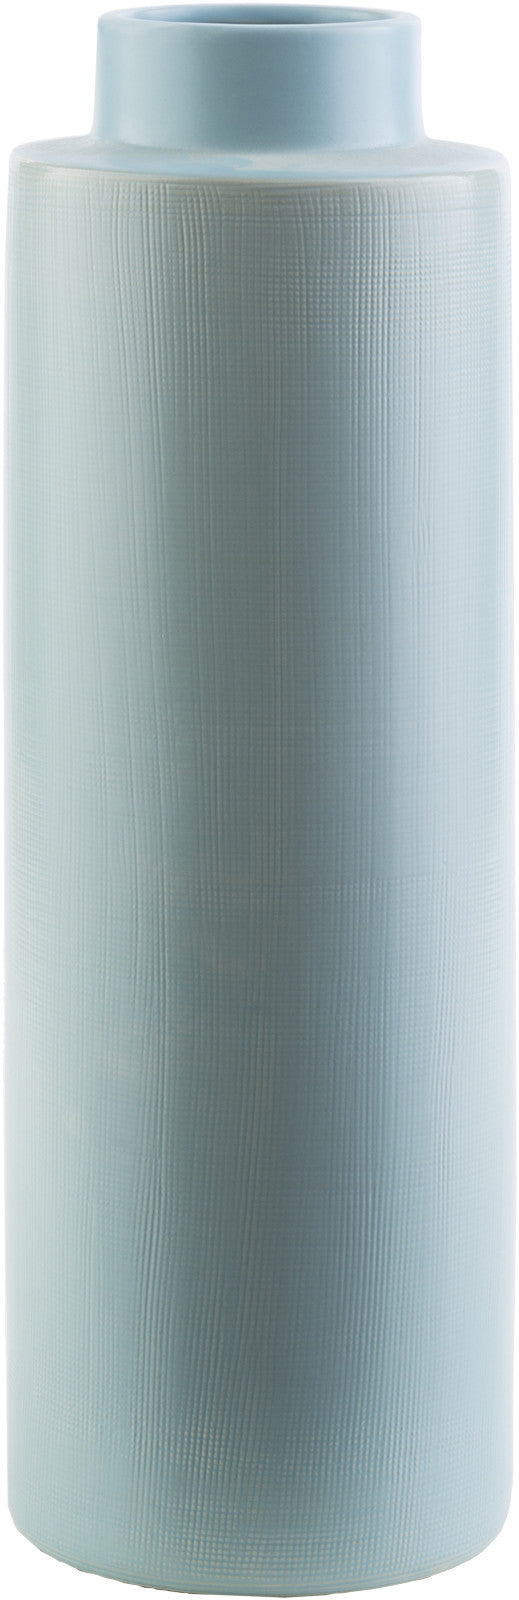 Surya Sarasota SRS-442 Vase 6.69 X 6.69 X 20.28 inches